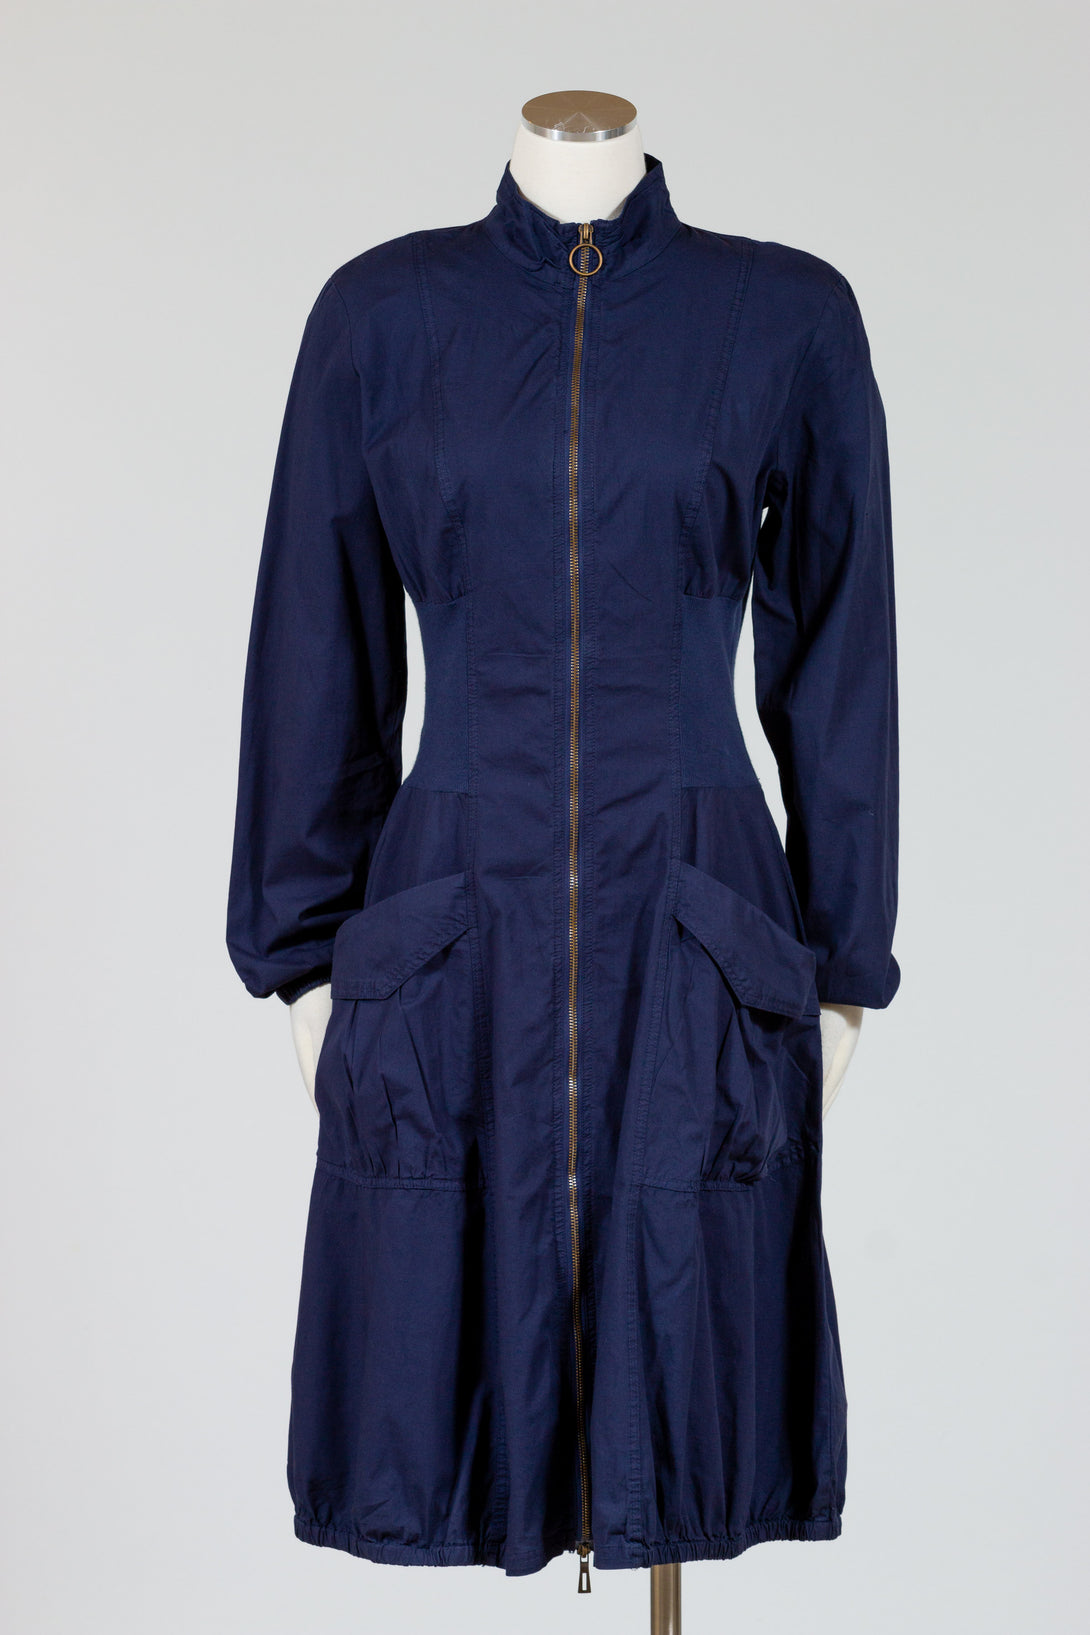 XCVI-Deschutes-Jacket-Dress-Navy-Blue